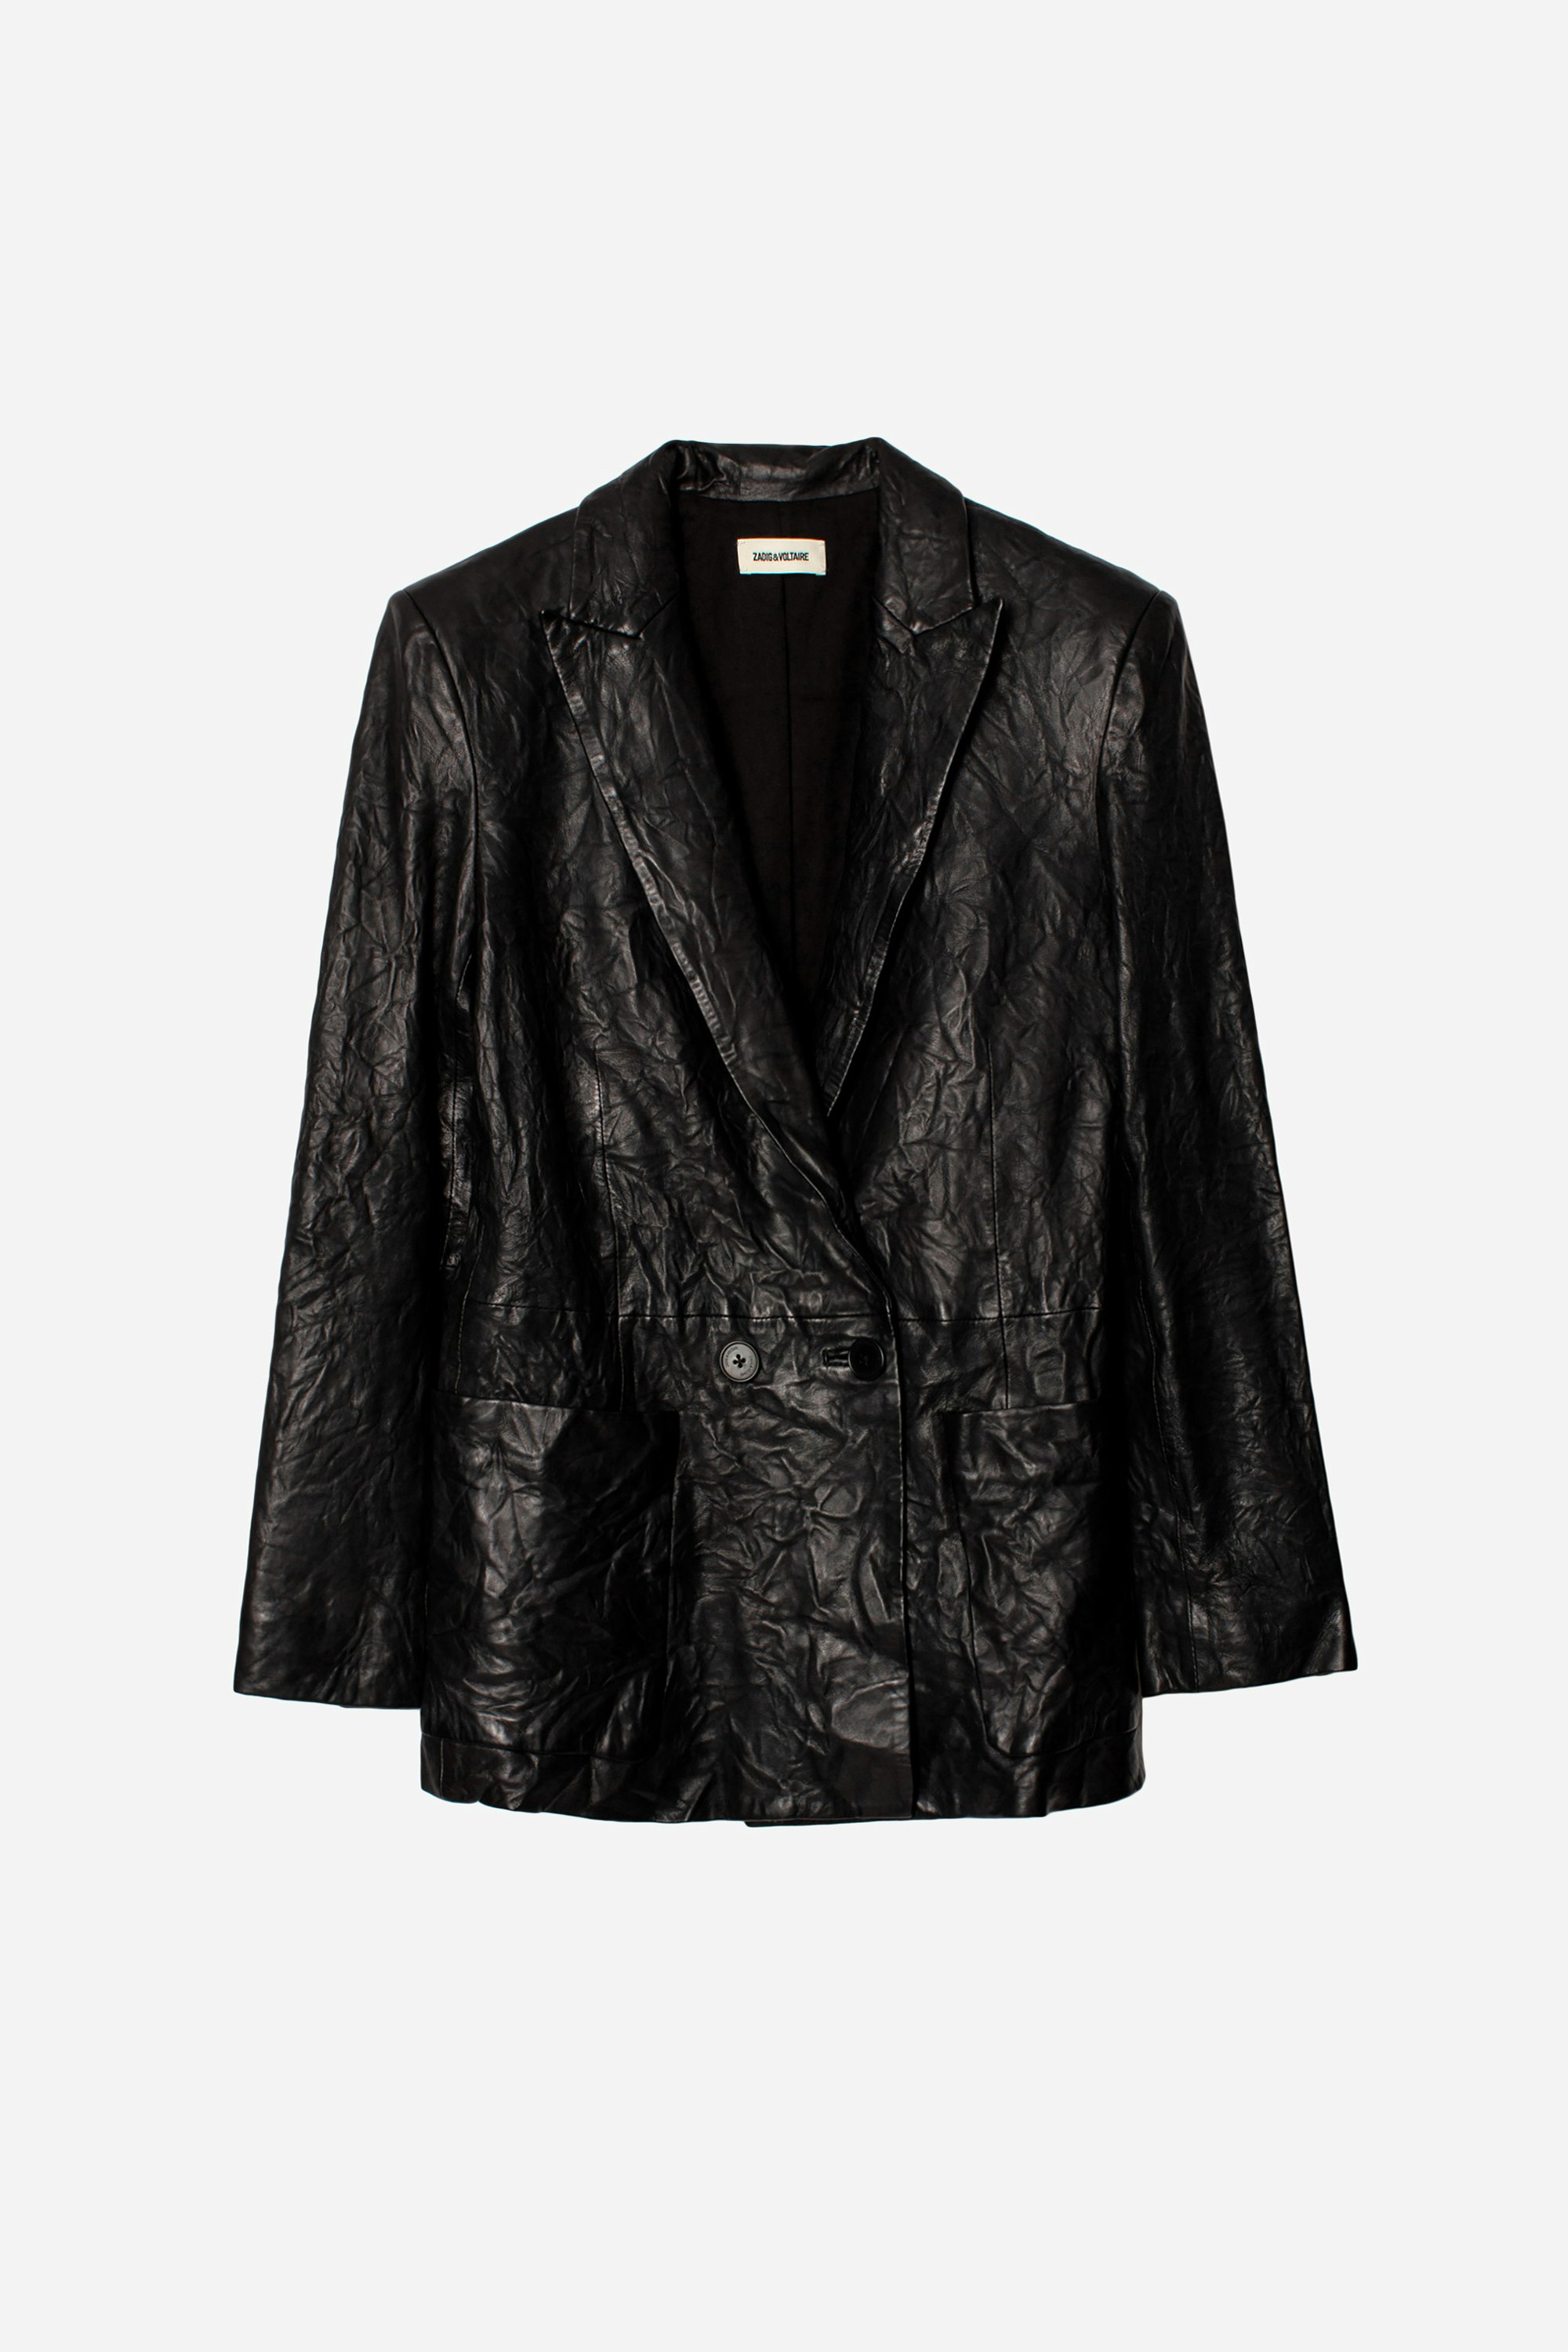 Visco Crinkle レザー ジャケット - Women's black crinkled-effect leather jacket.